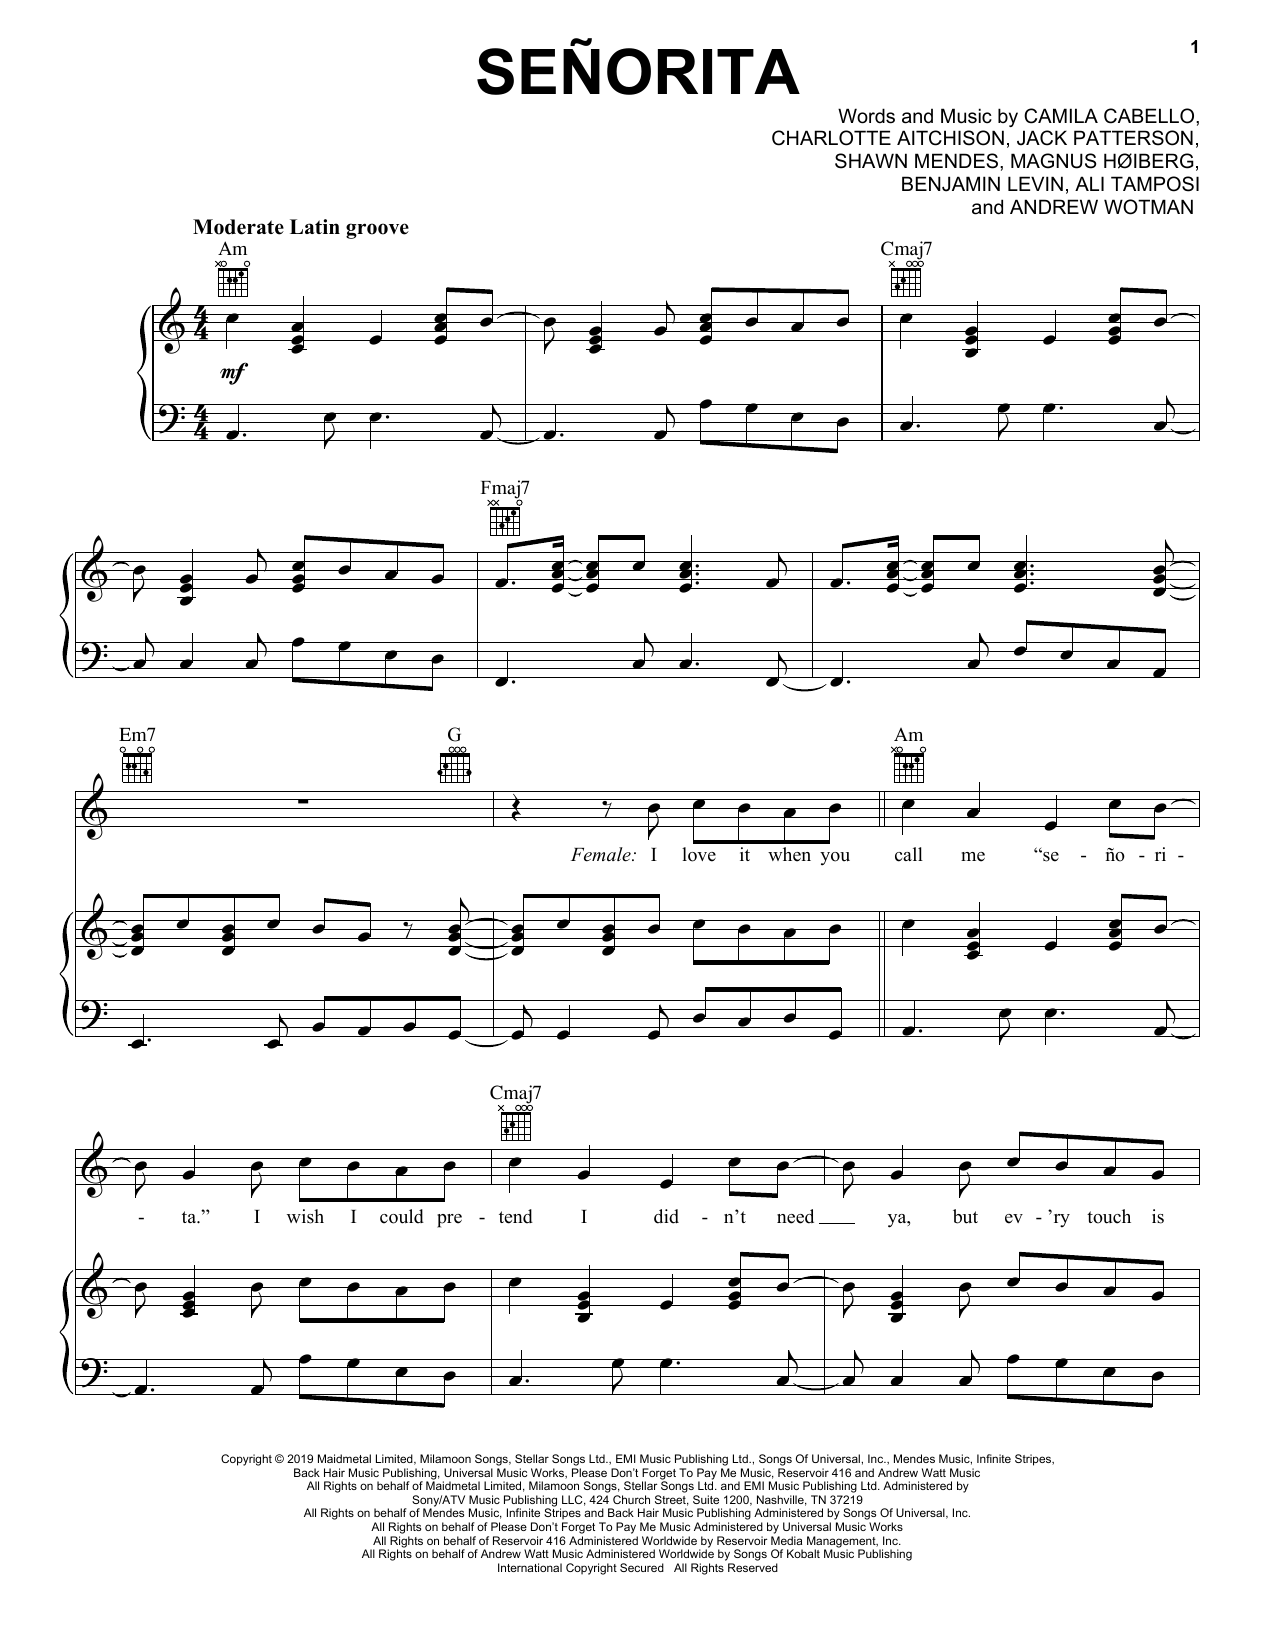 Shawn Mendes & Camila Cabello Señorita Sheet Music Notes & Chords for Trombone Duet - Download or Print PDF